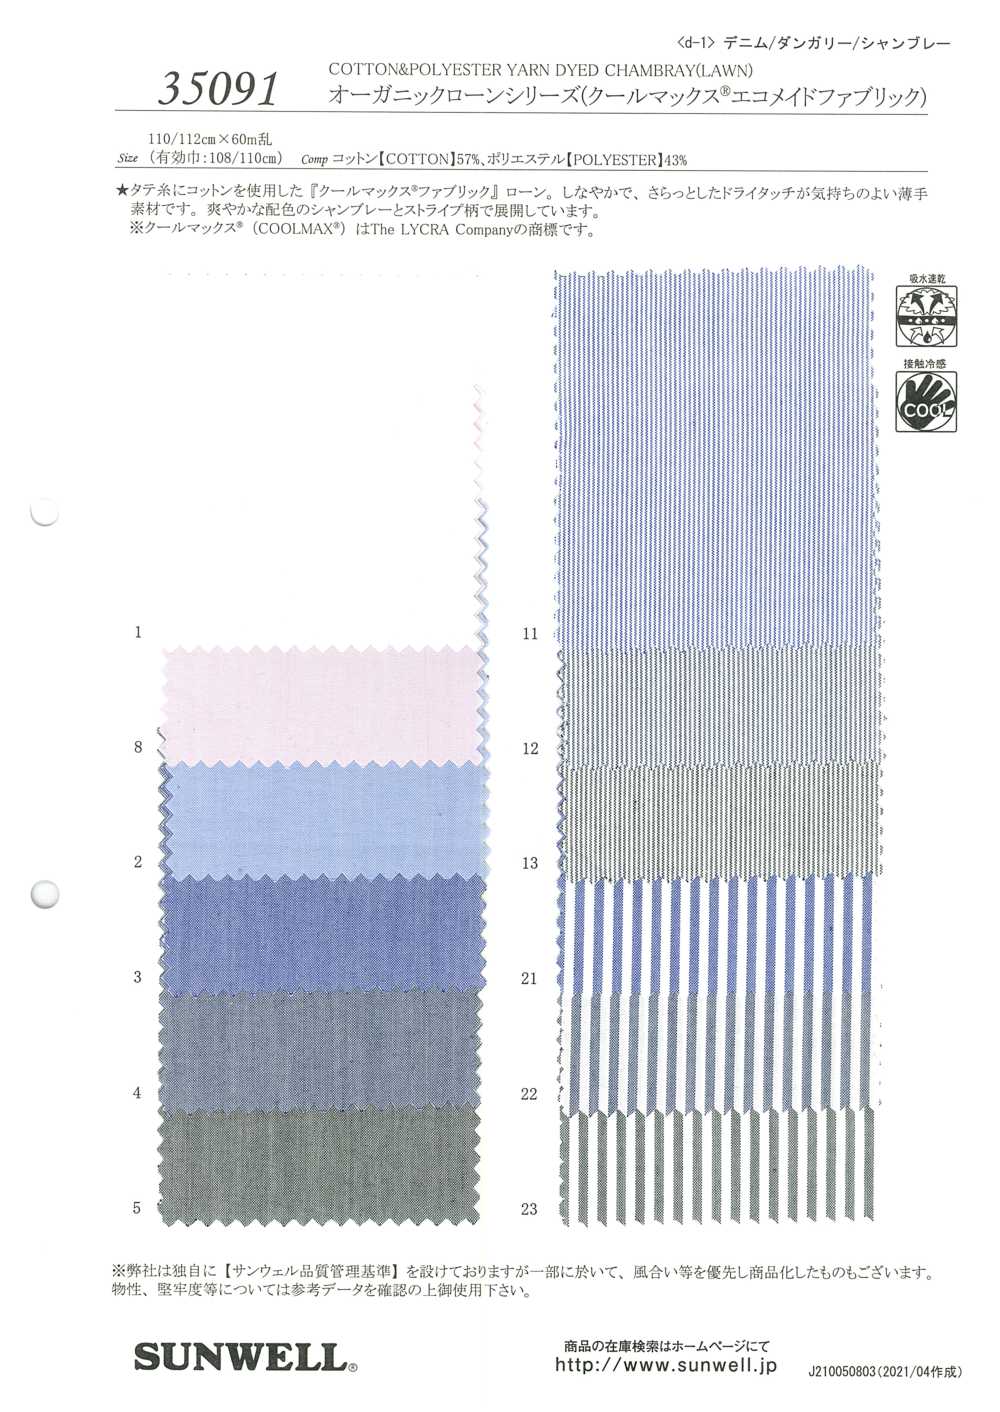 35091 Organic Lawn-Serie (Coolmax (R) öko-hergestellter Stoff)[Textilgewebe] SUNWELL